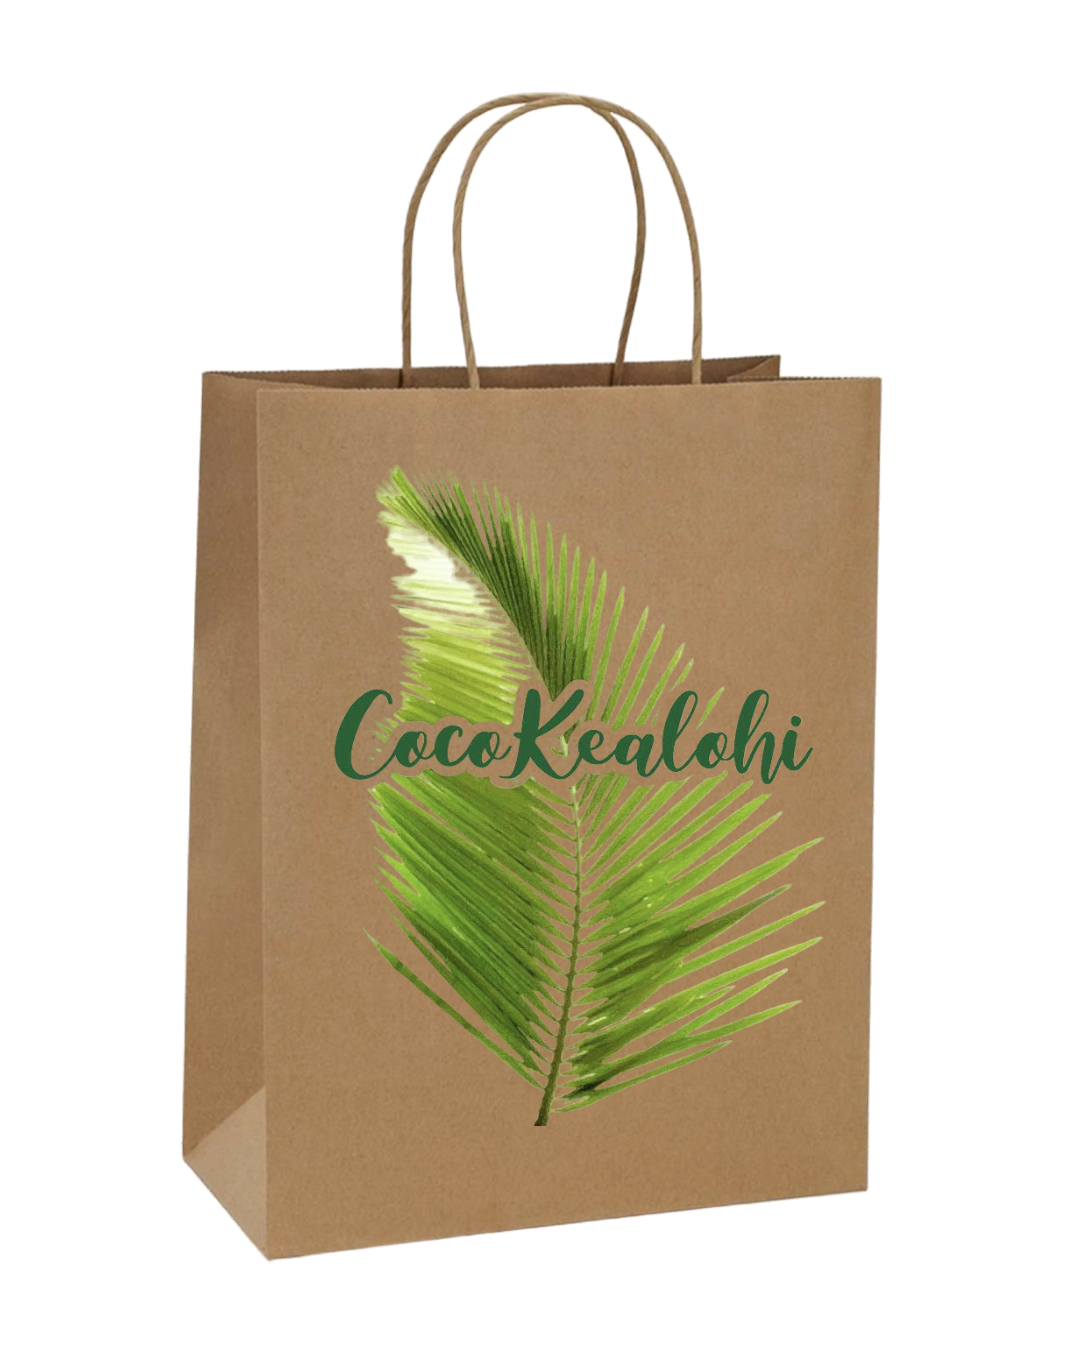 COCOKEALOHI LUCKY BAGS